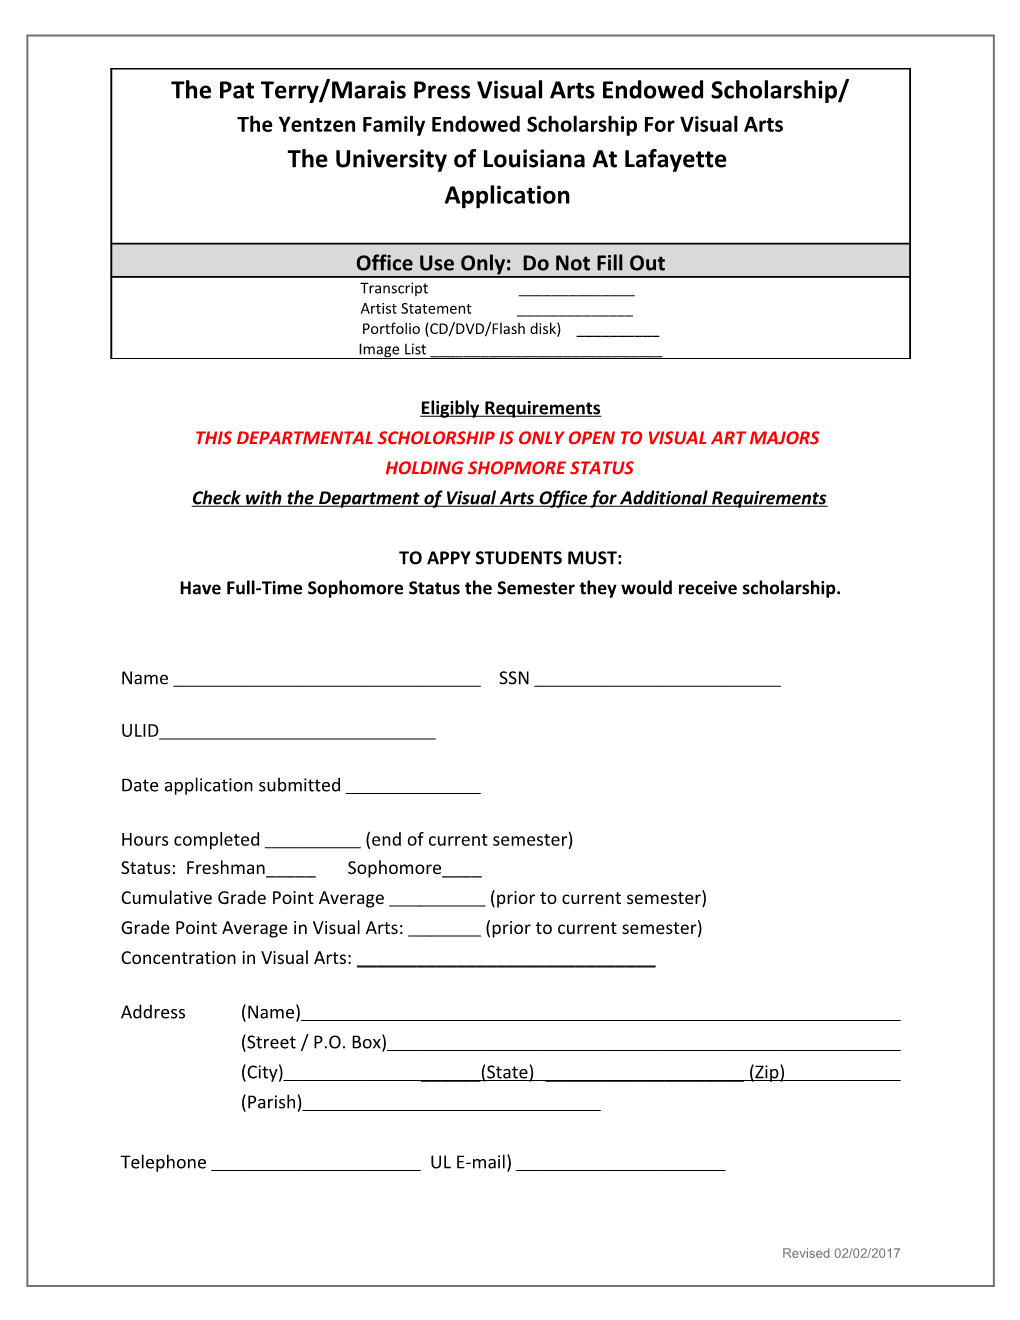 VIAR Scholarship Form